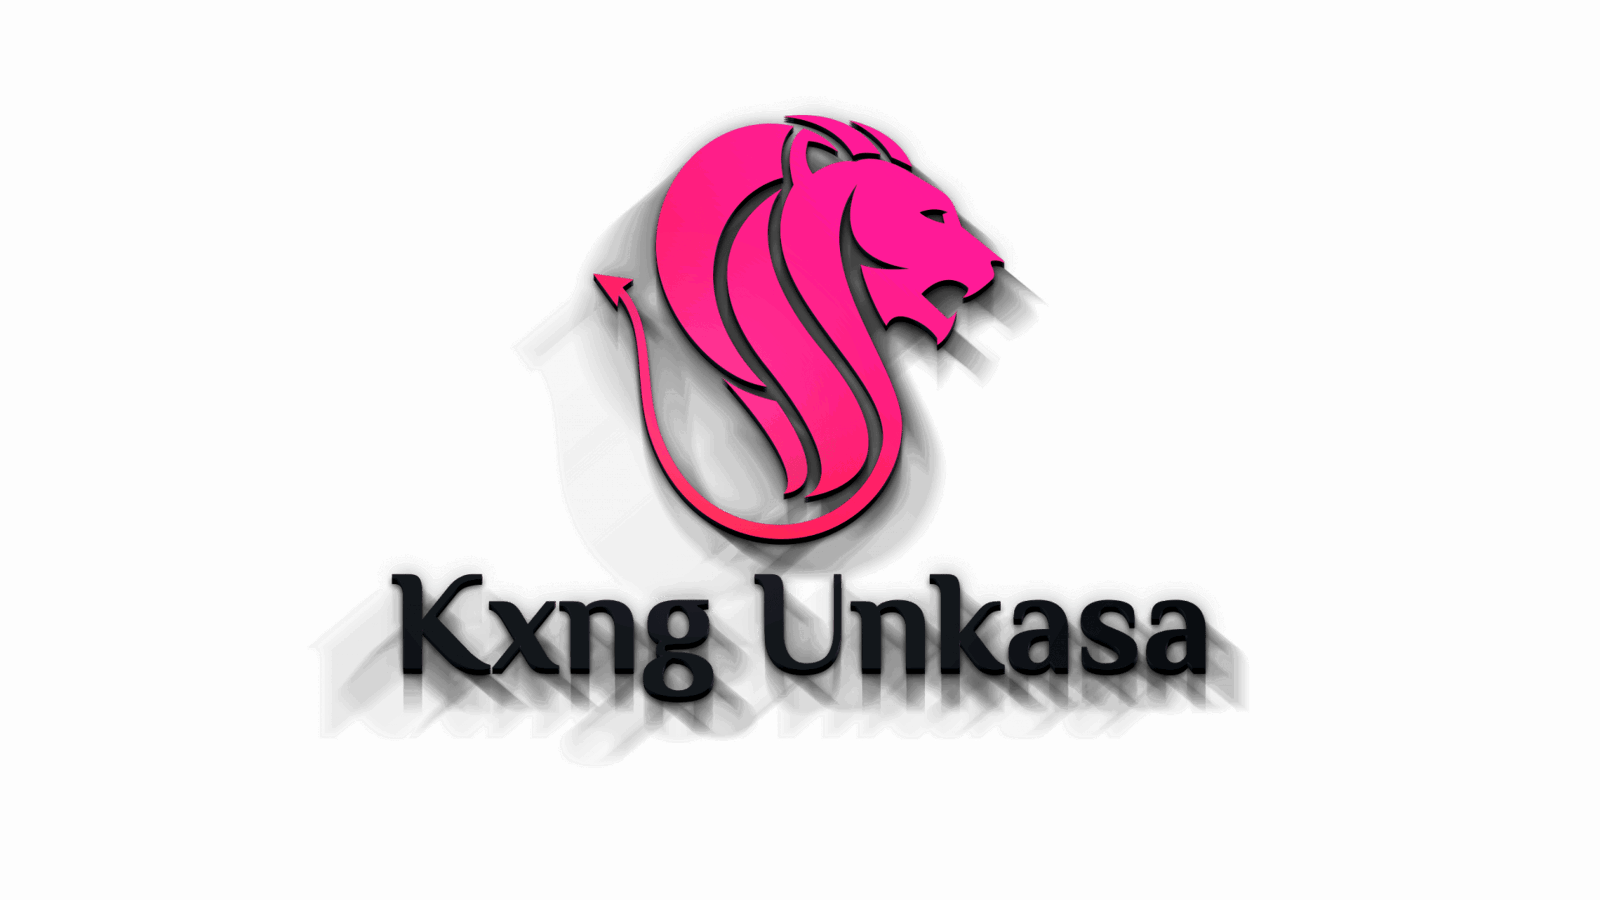 Cover photo of Kxng Unkasa xXx